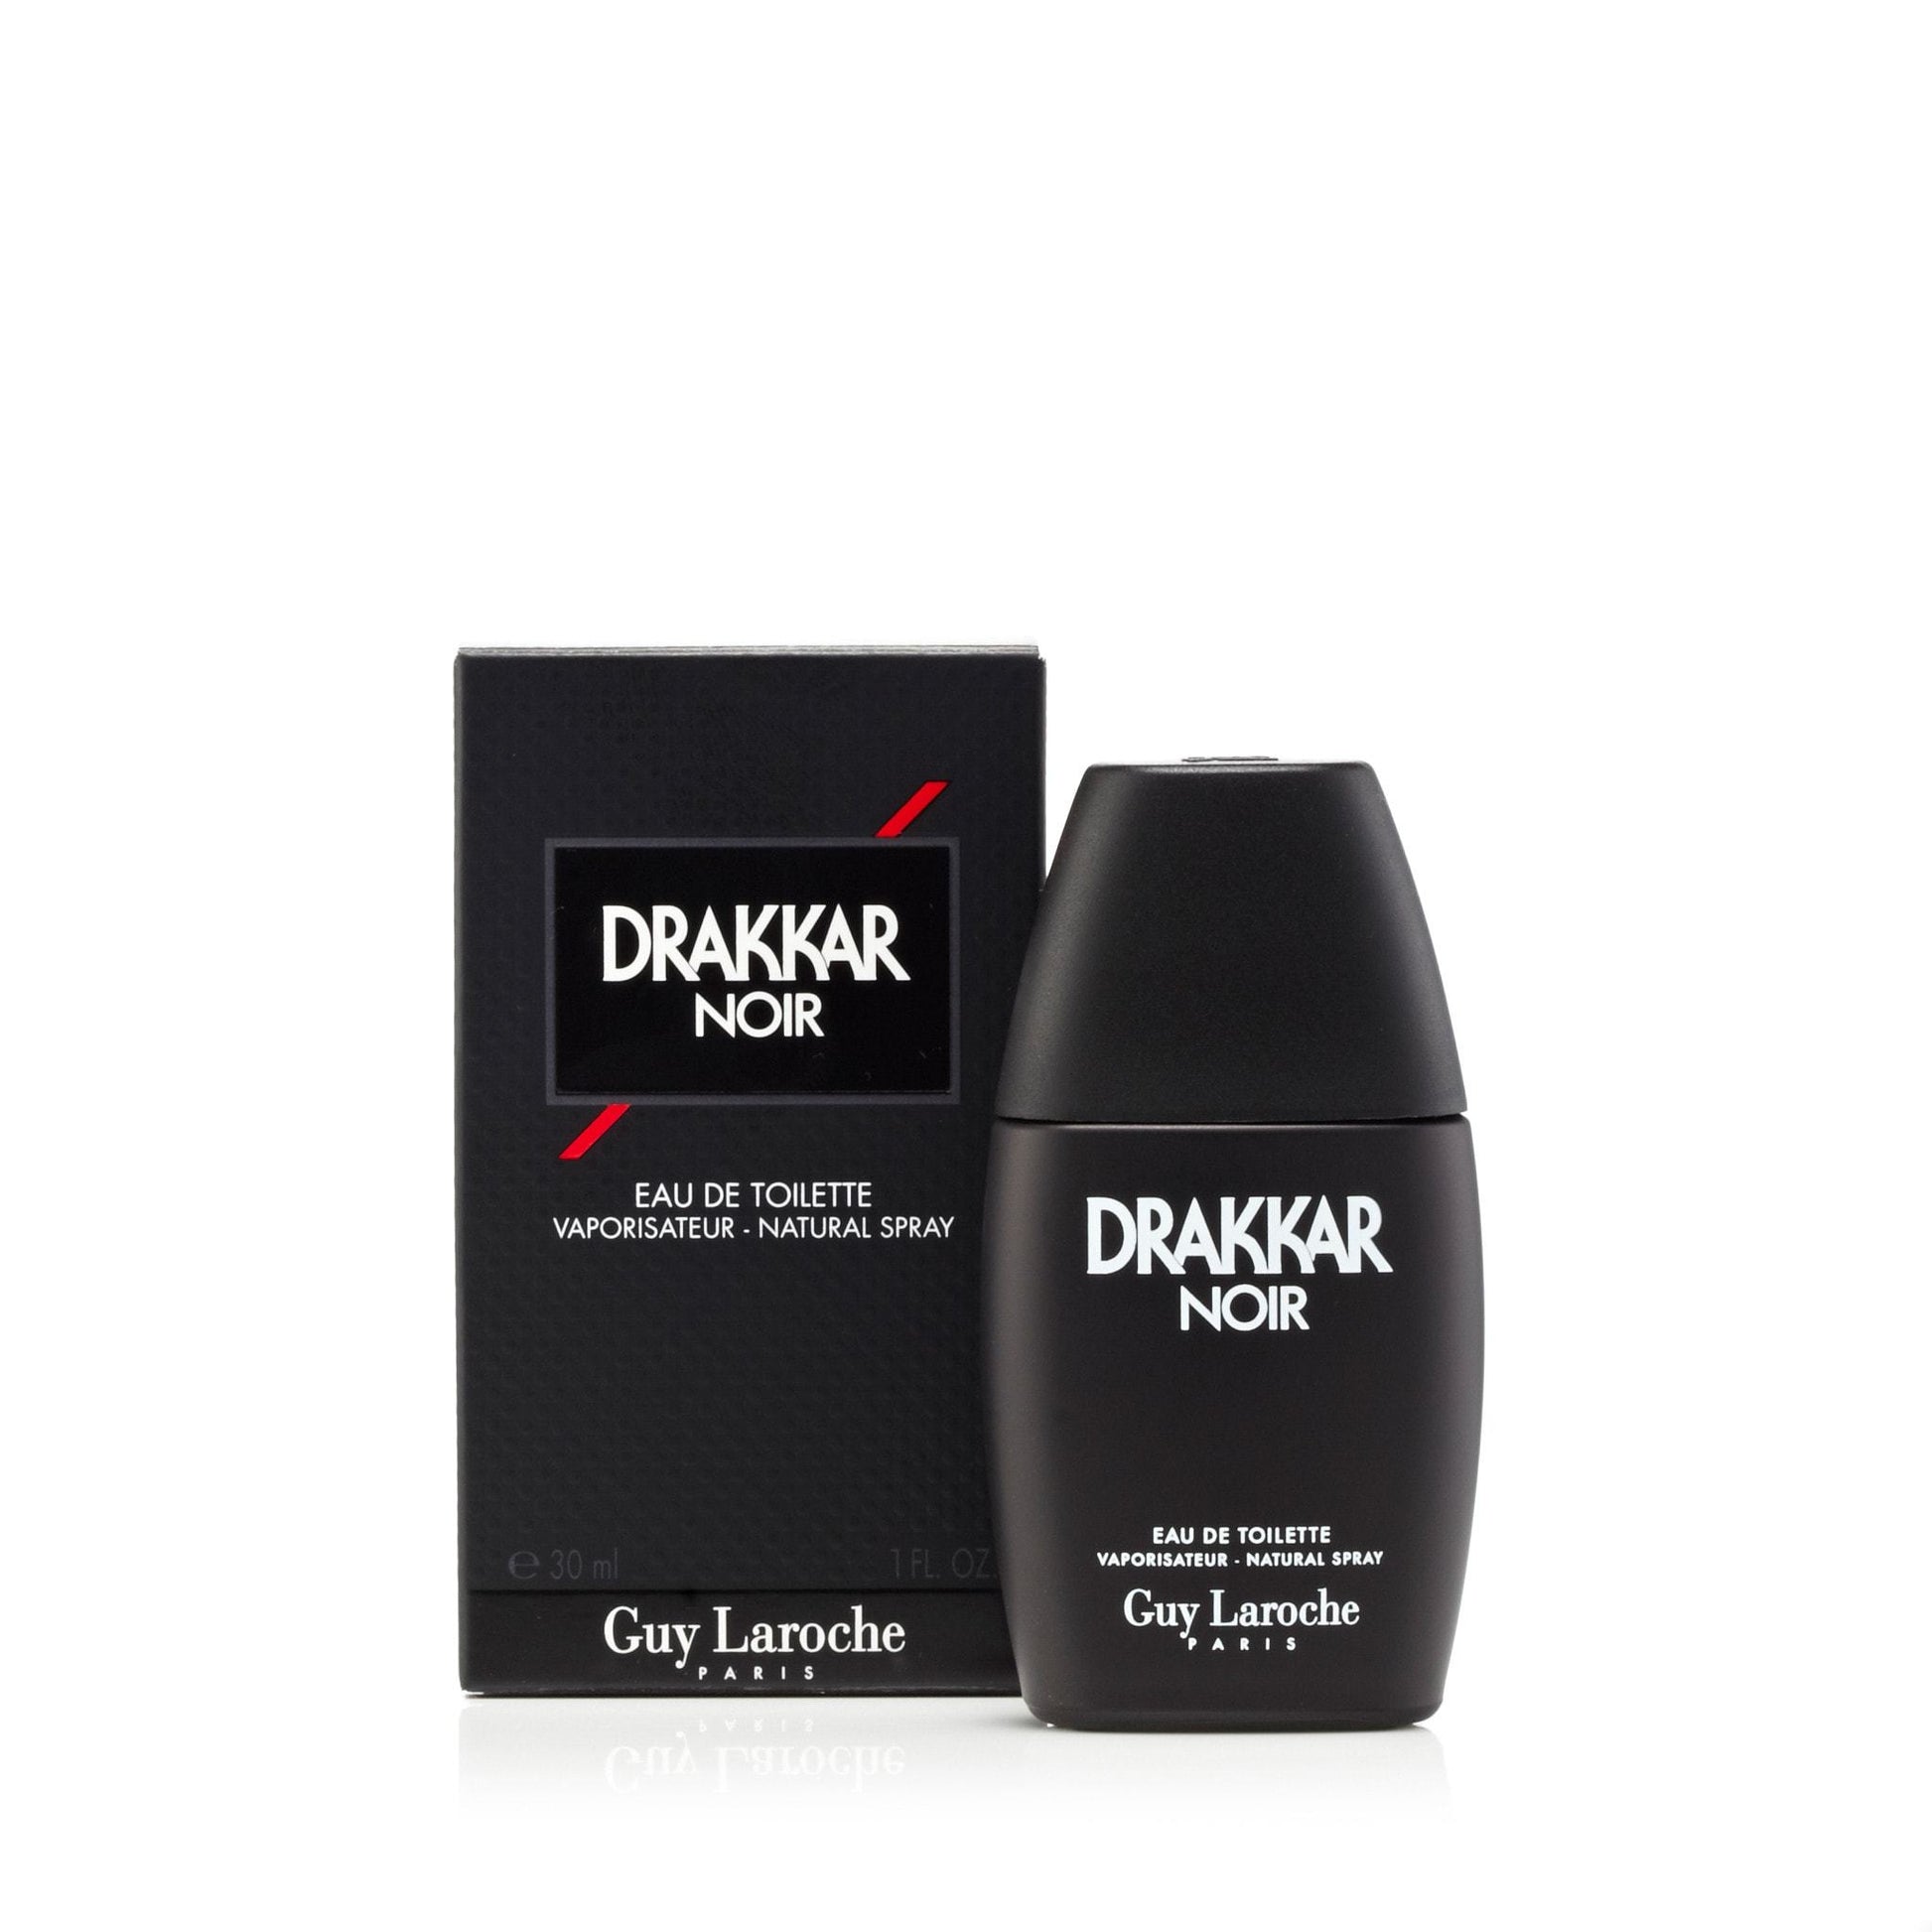 Drakkar Noir Eau de Toilette Spray for Men by Guy Laroche, Product image 5